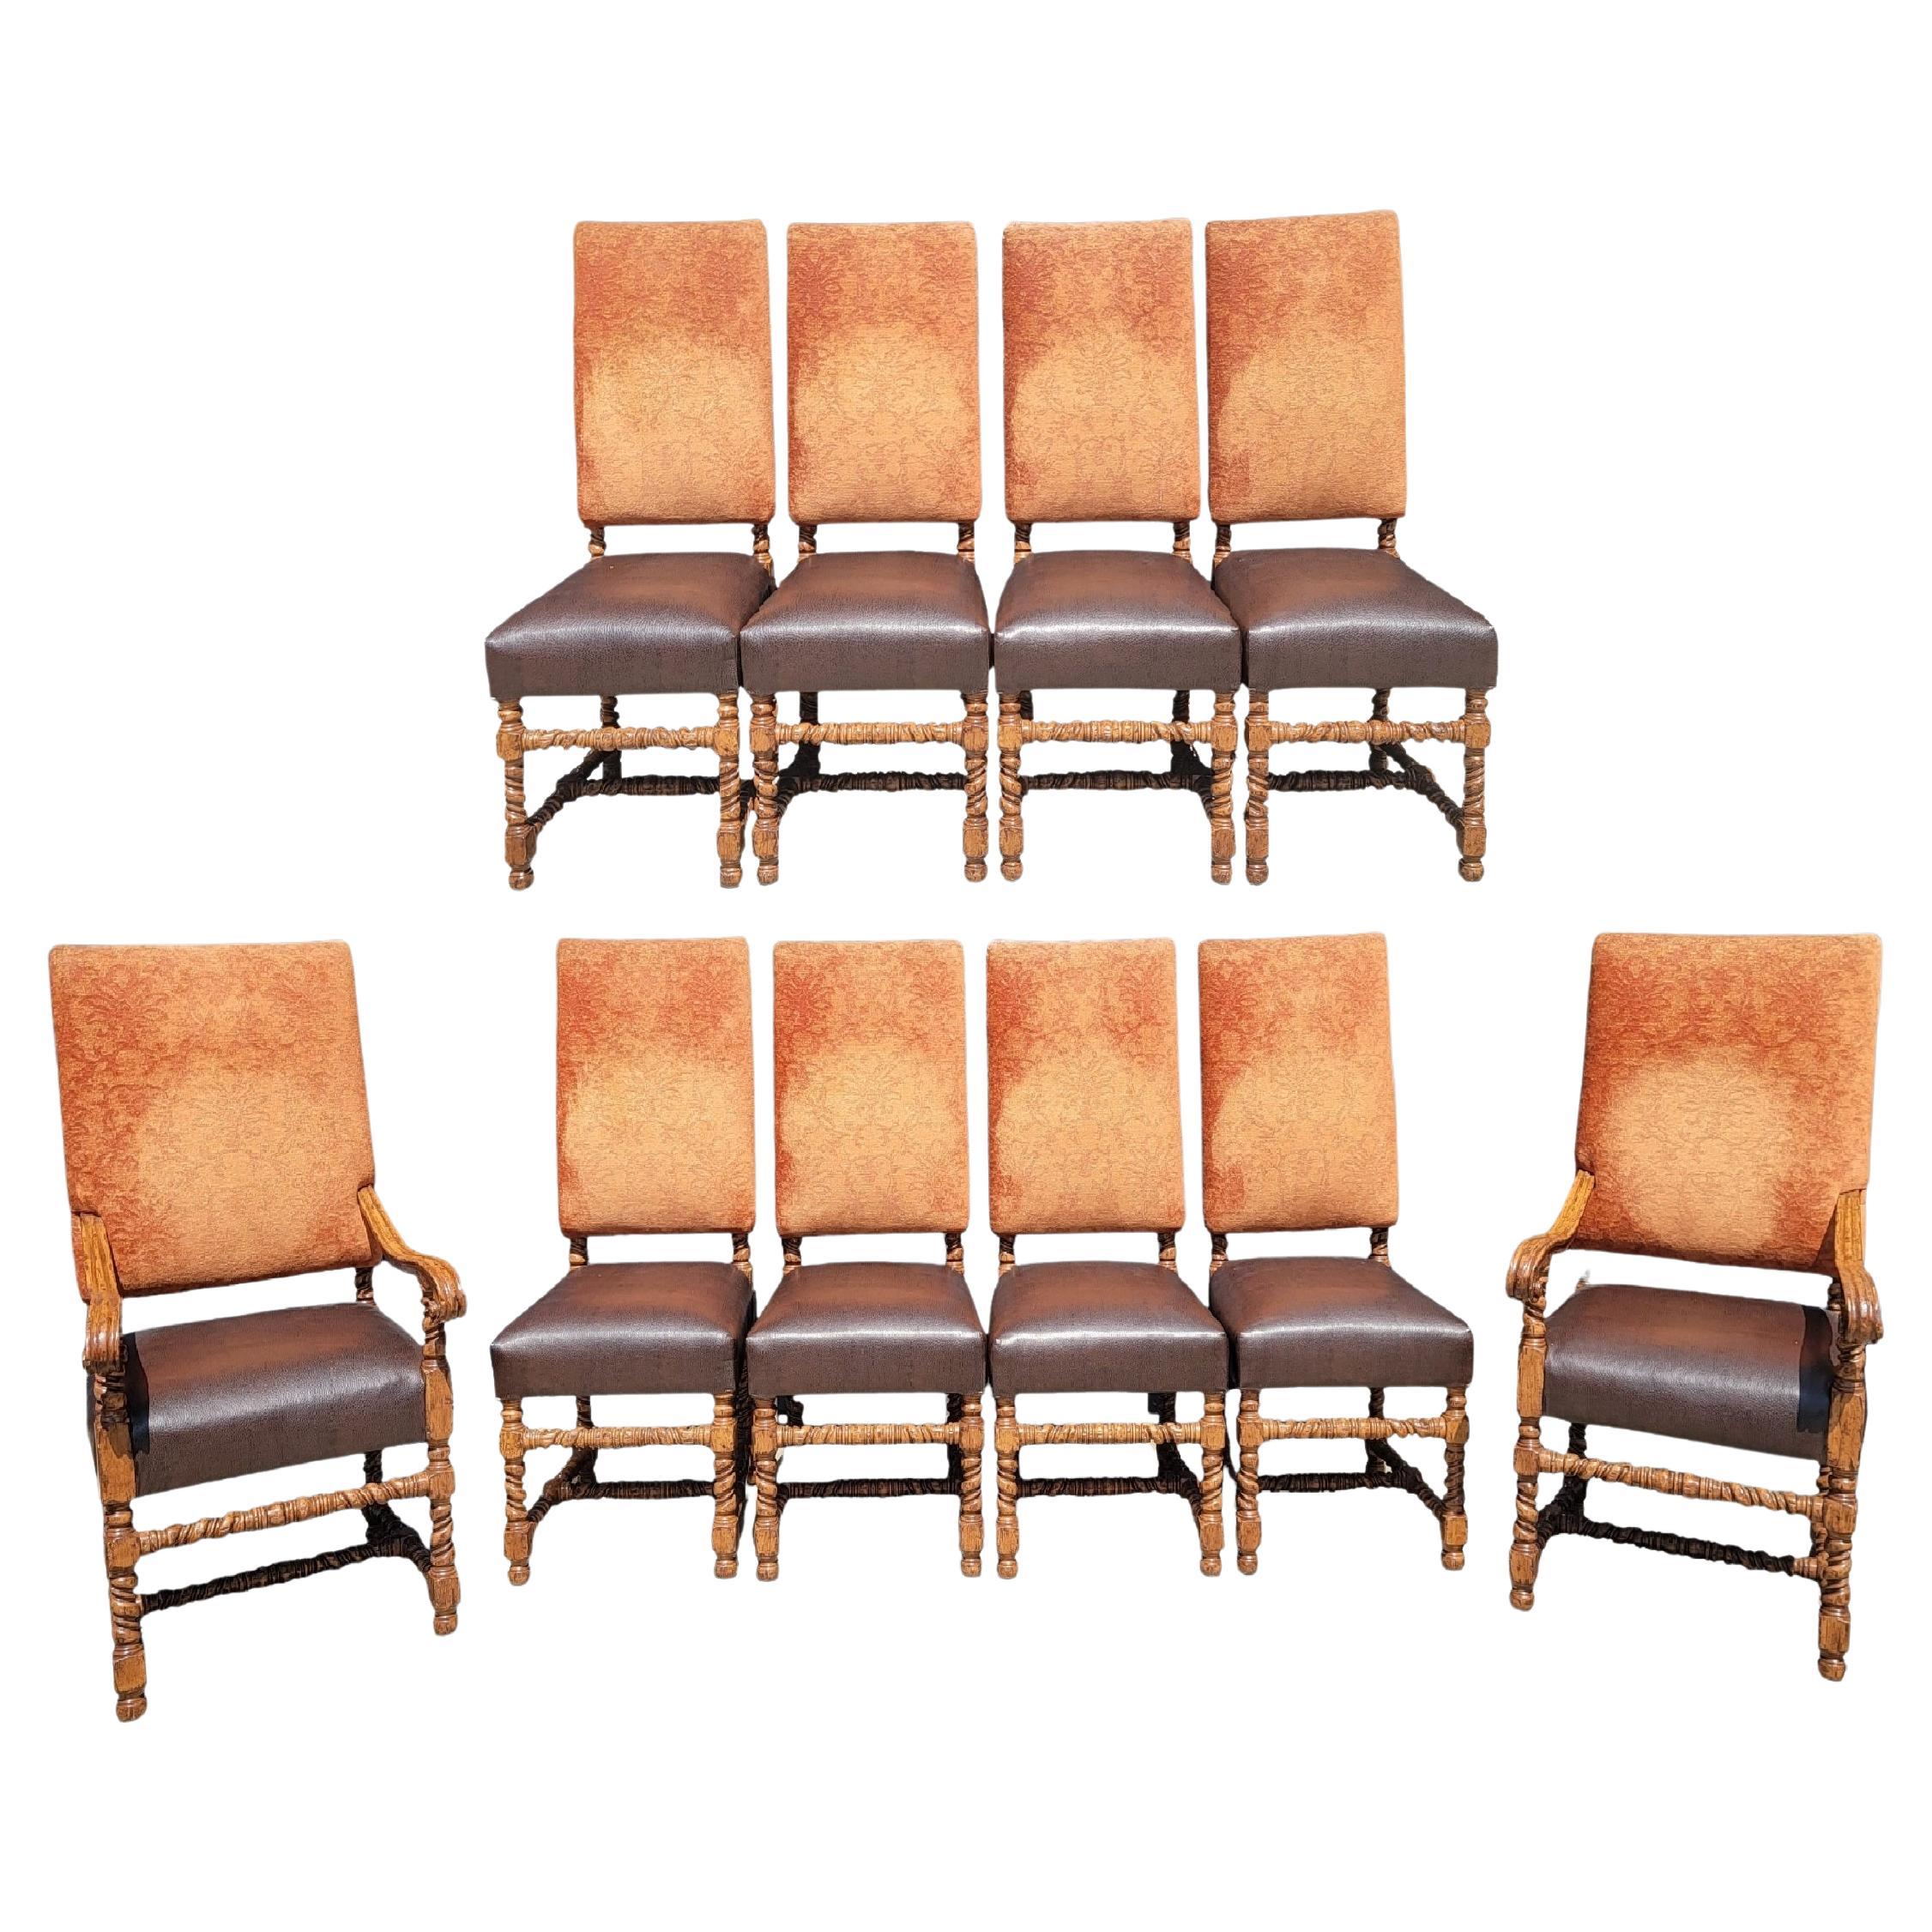 Vintage Set of Ten Spanish Revival Barley Twist High Back Chairs